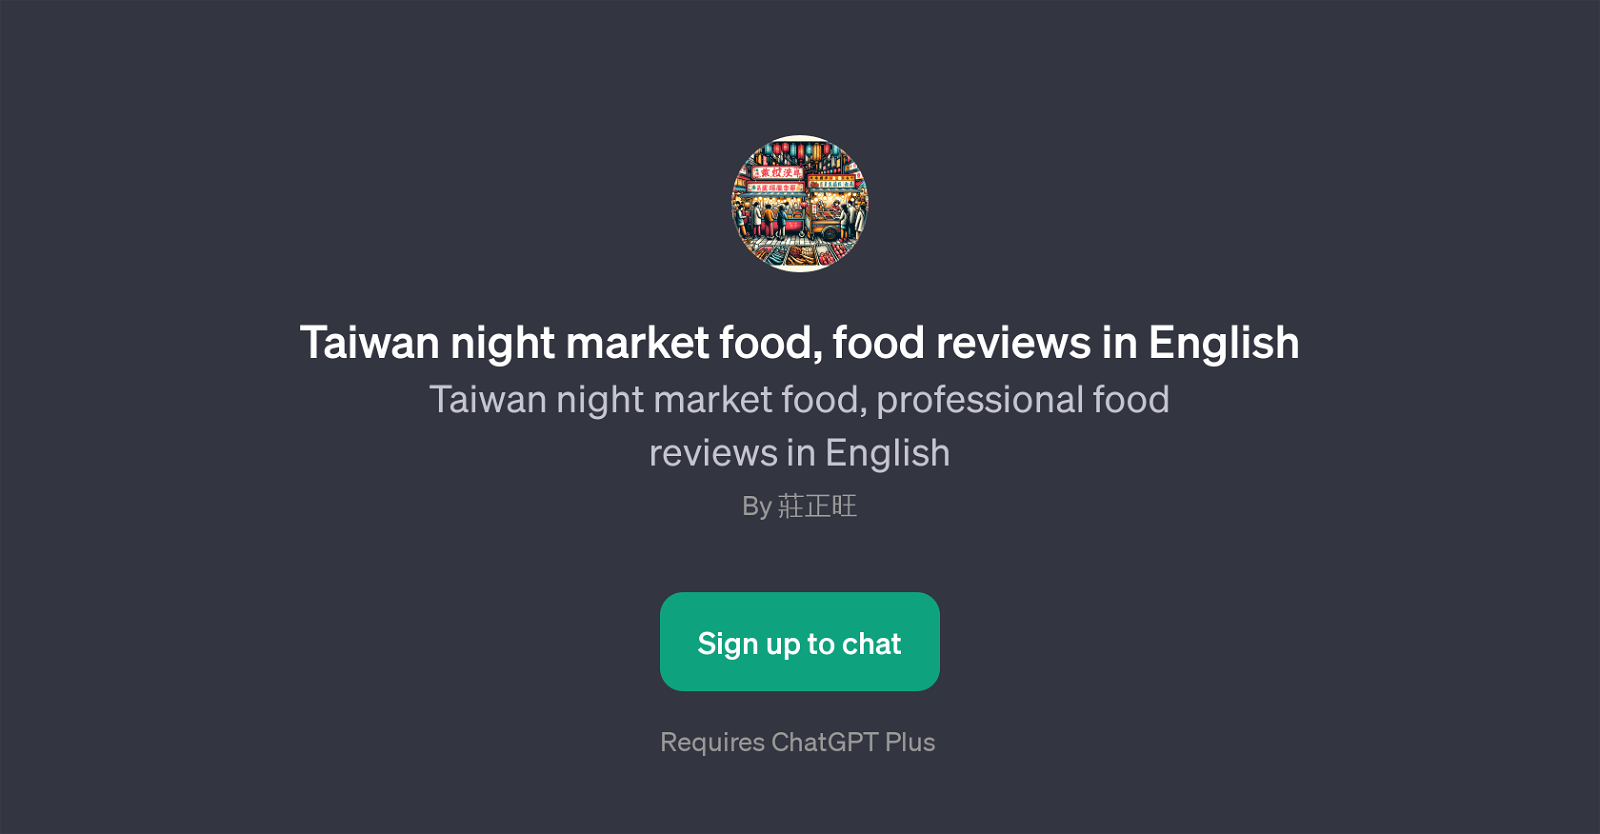 Taiwan Night Market Food Reviews website